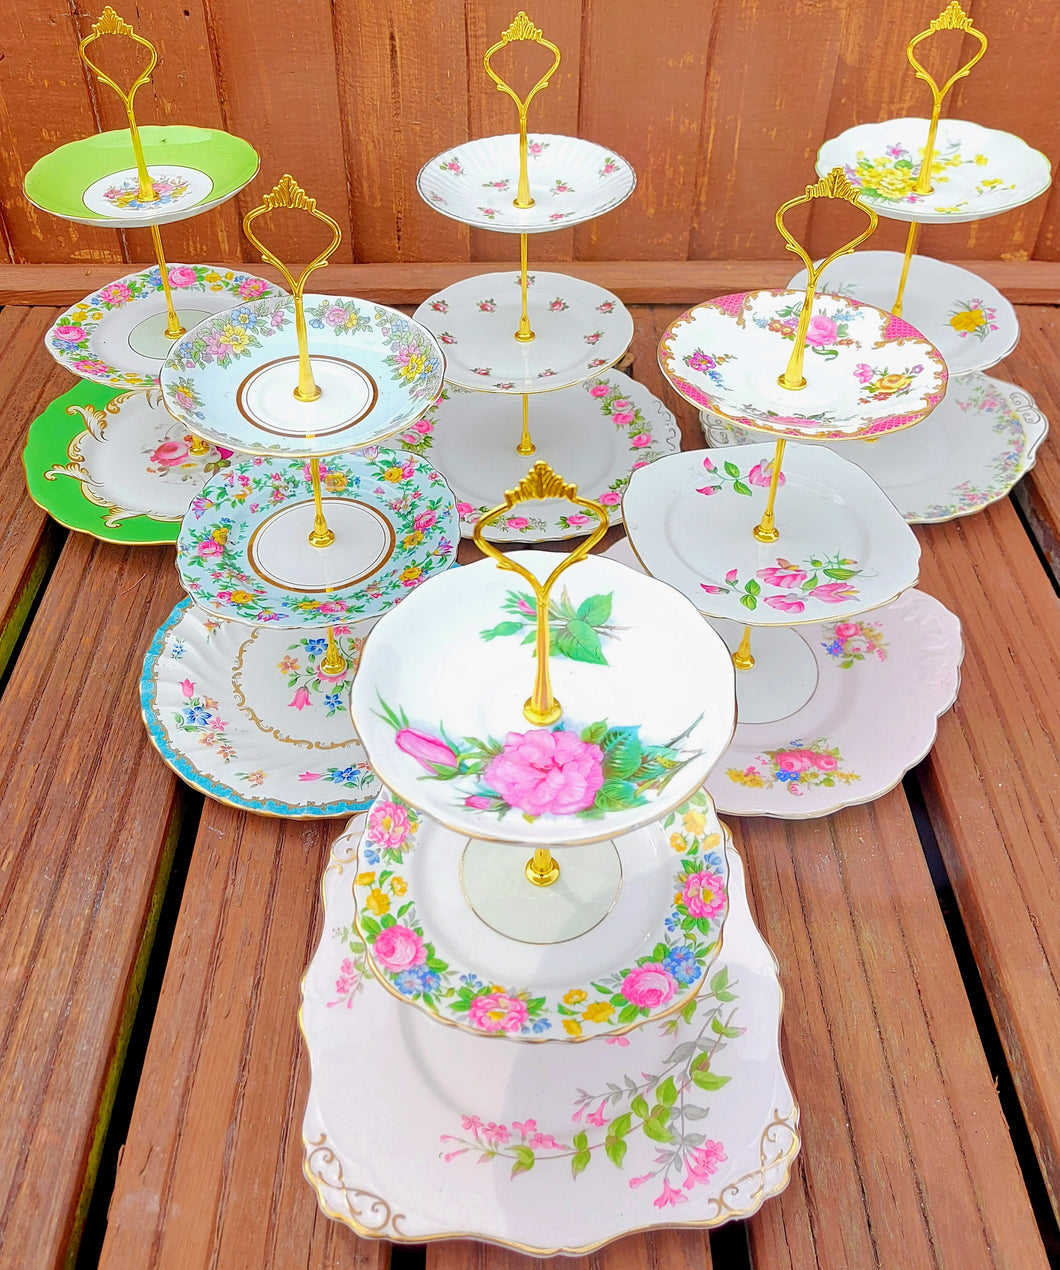 10 (30pcs) x Vintage 3 Tier Mismatched Floral Cake Stands, Afternoon Tea Party Wedding Crockery Bulk Plates Trays